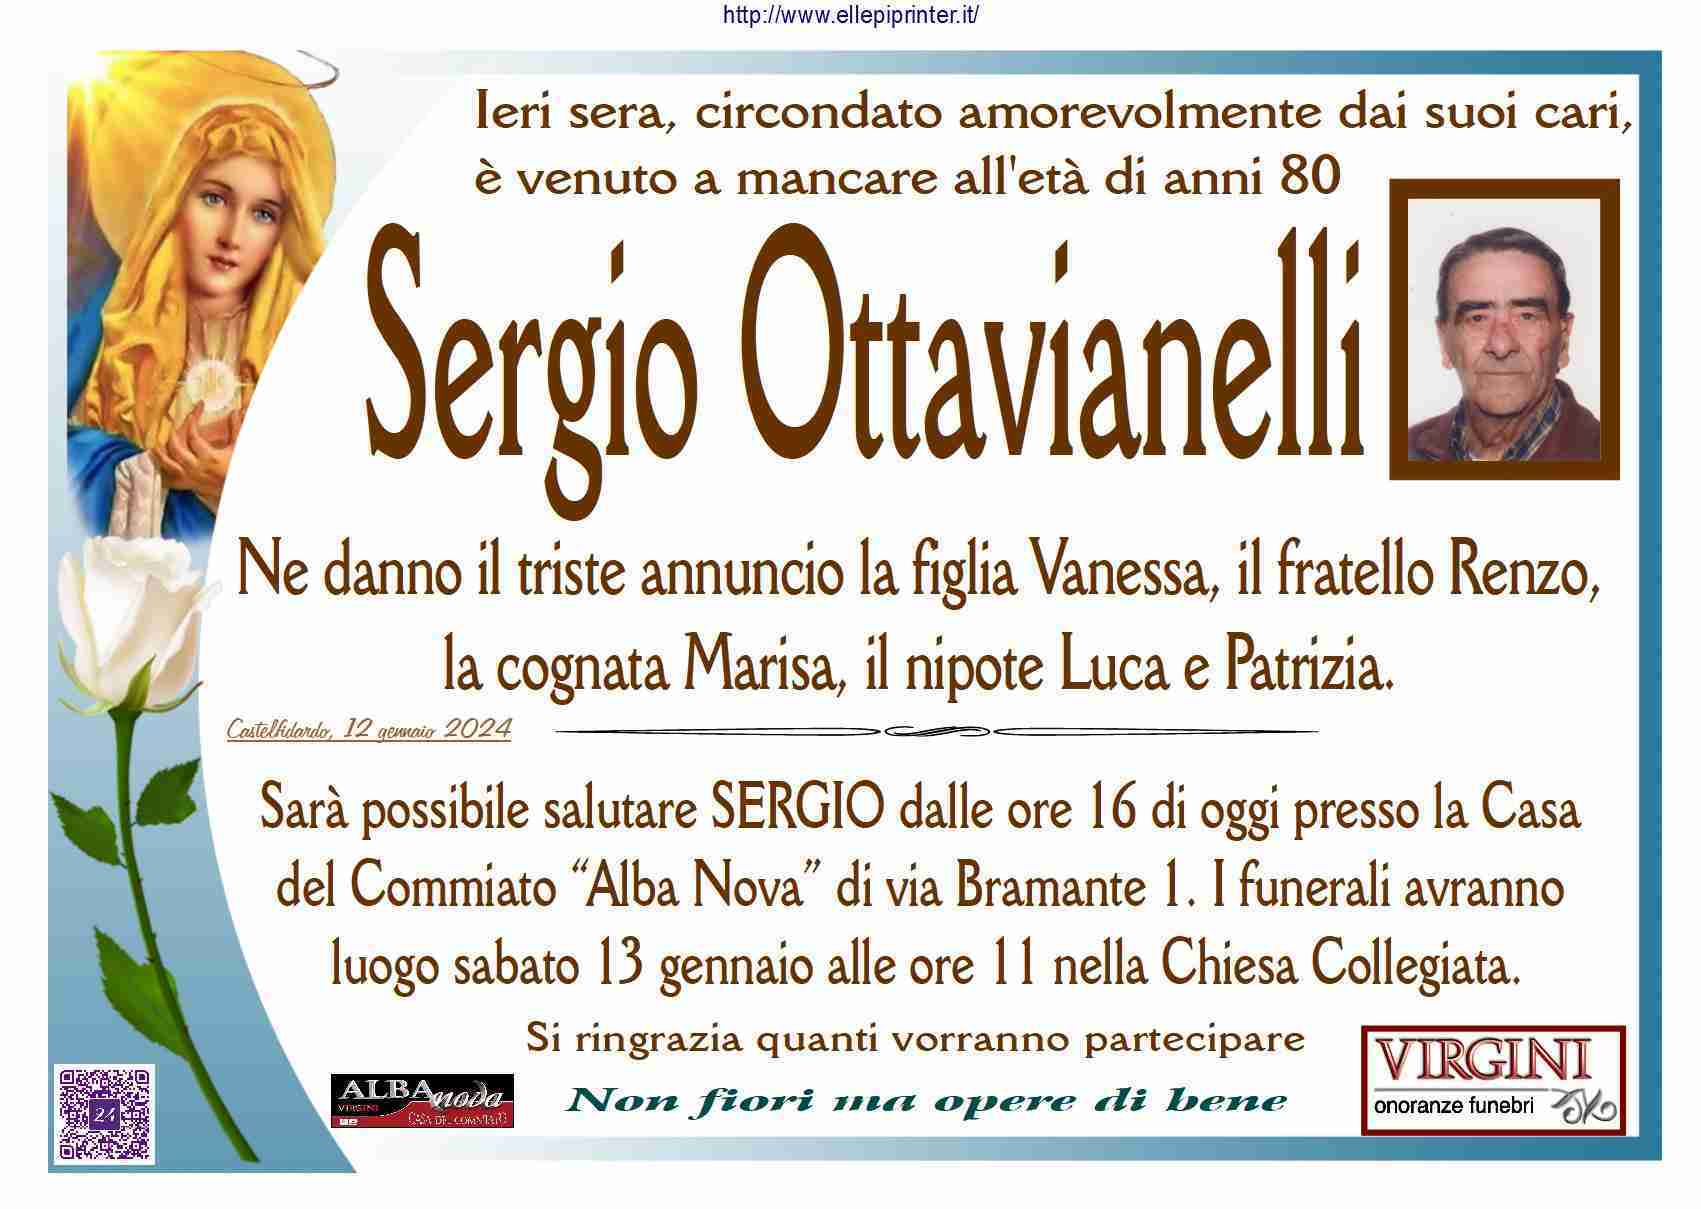 Sergio Ottavianelli